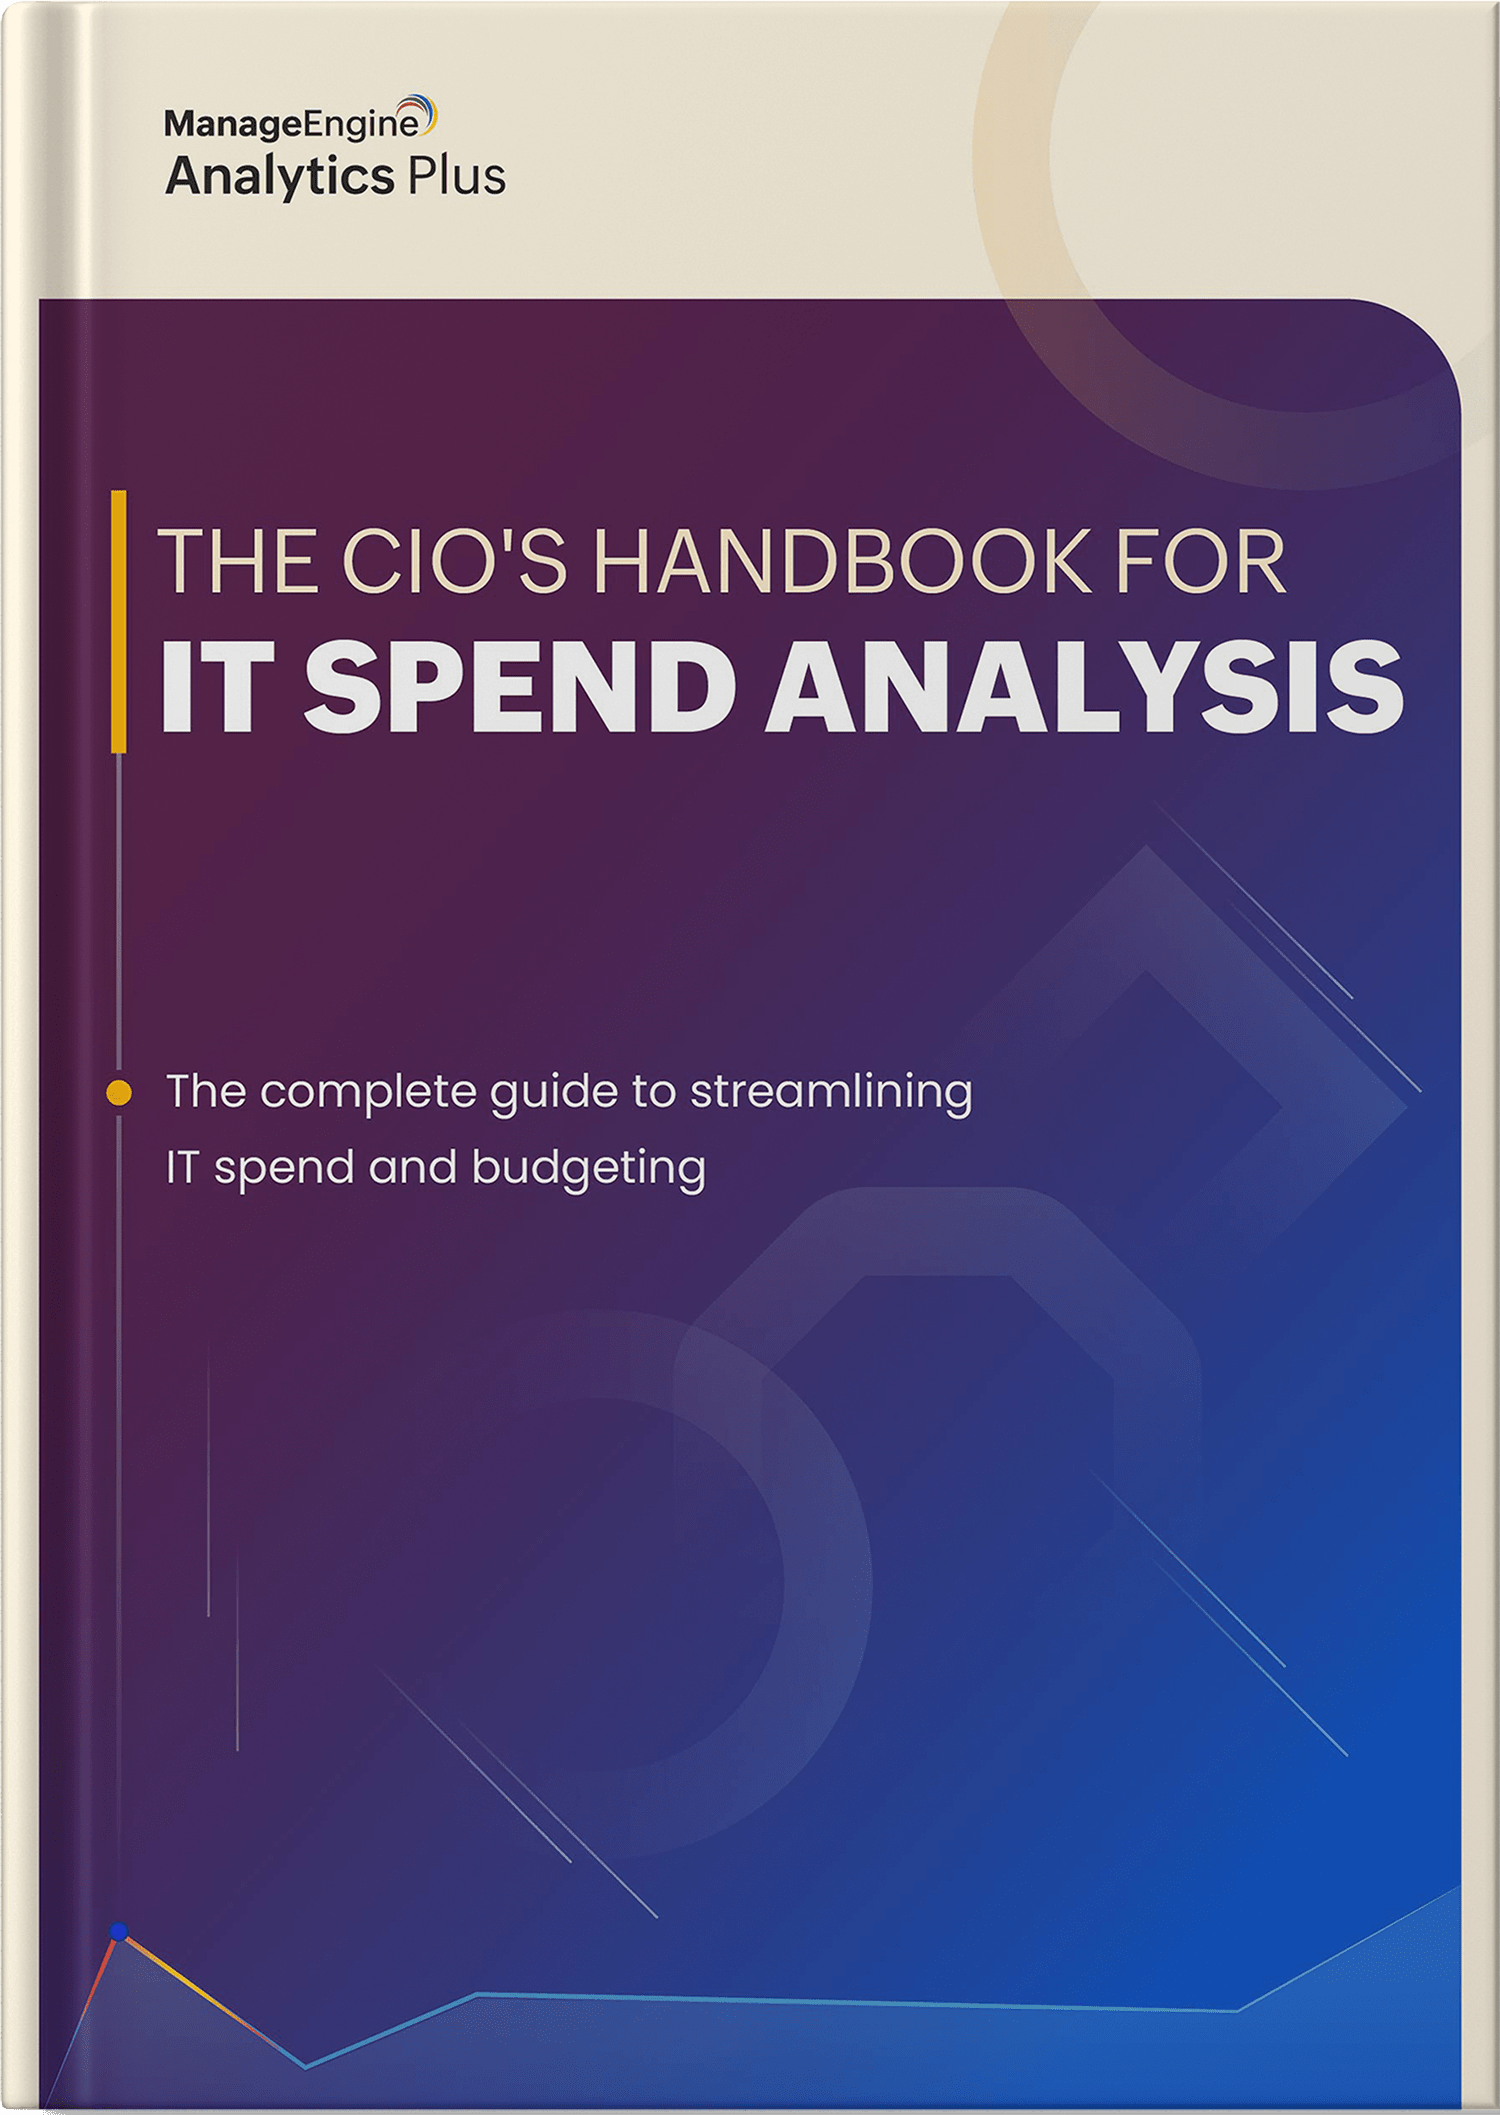 The CIO's handbook for analyzing IT budget spending